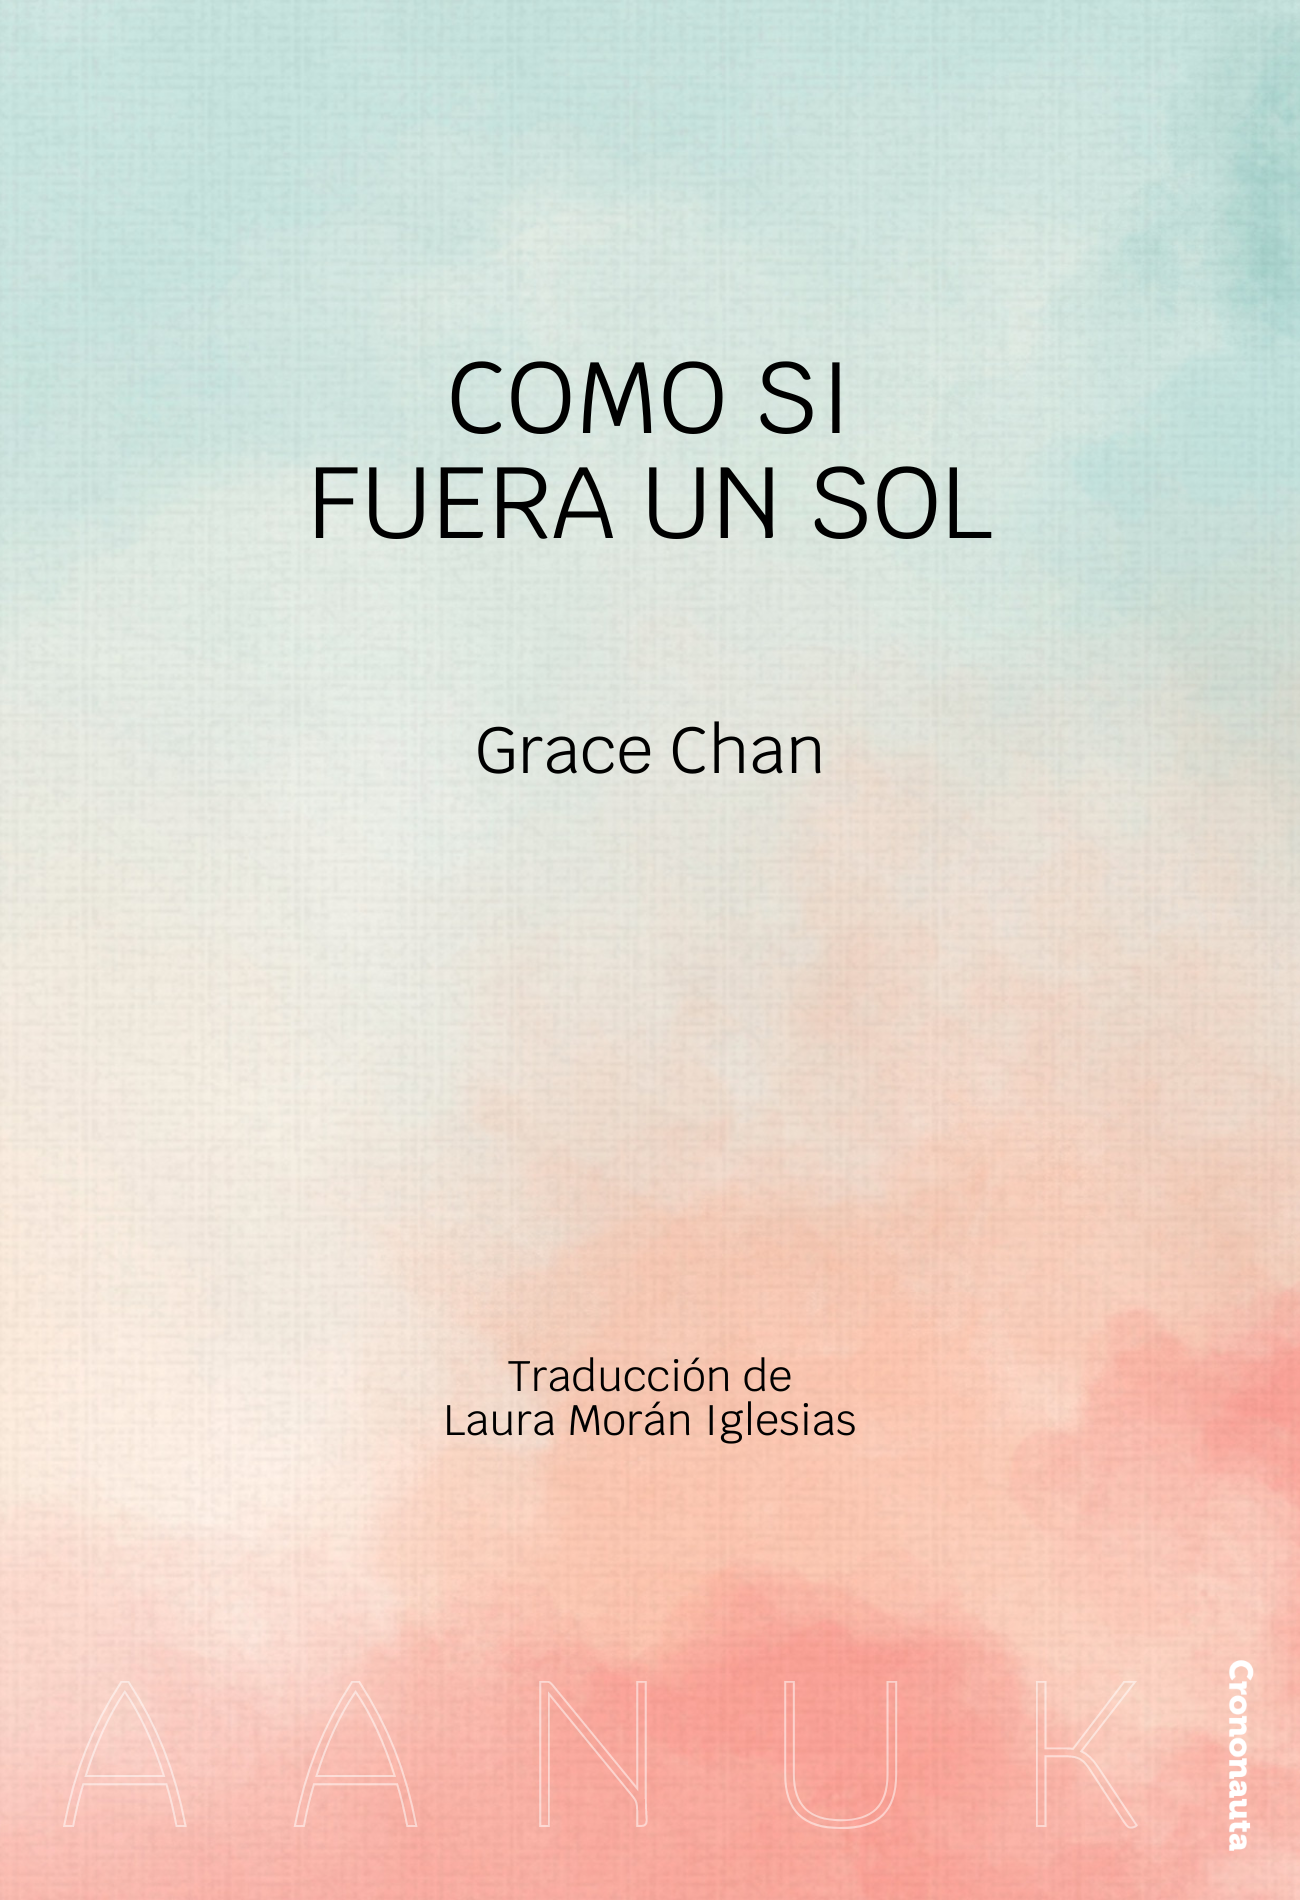 Como si fuera un sol, de Grace Chan. Traducción de Laura Morán Iglesias. En Aanuk.